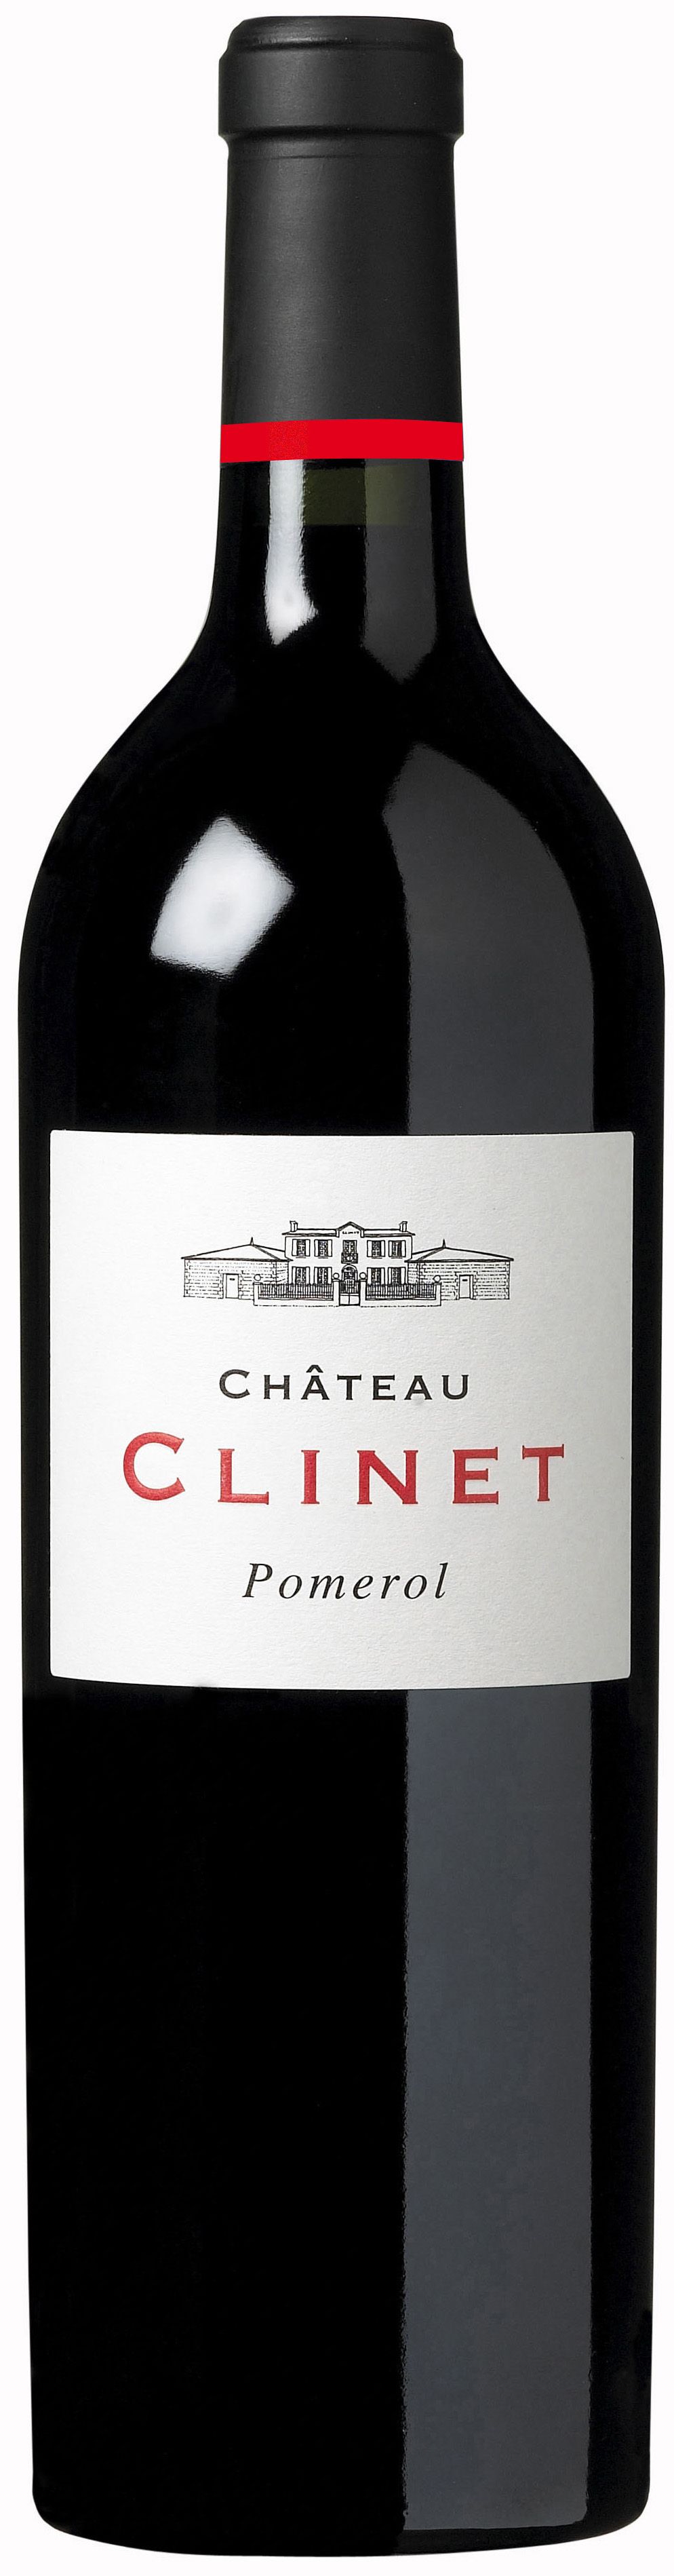 Chateau Clinet, 2015